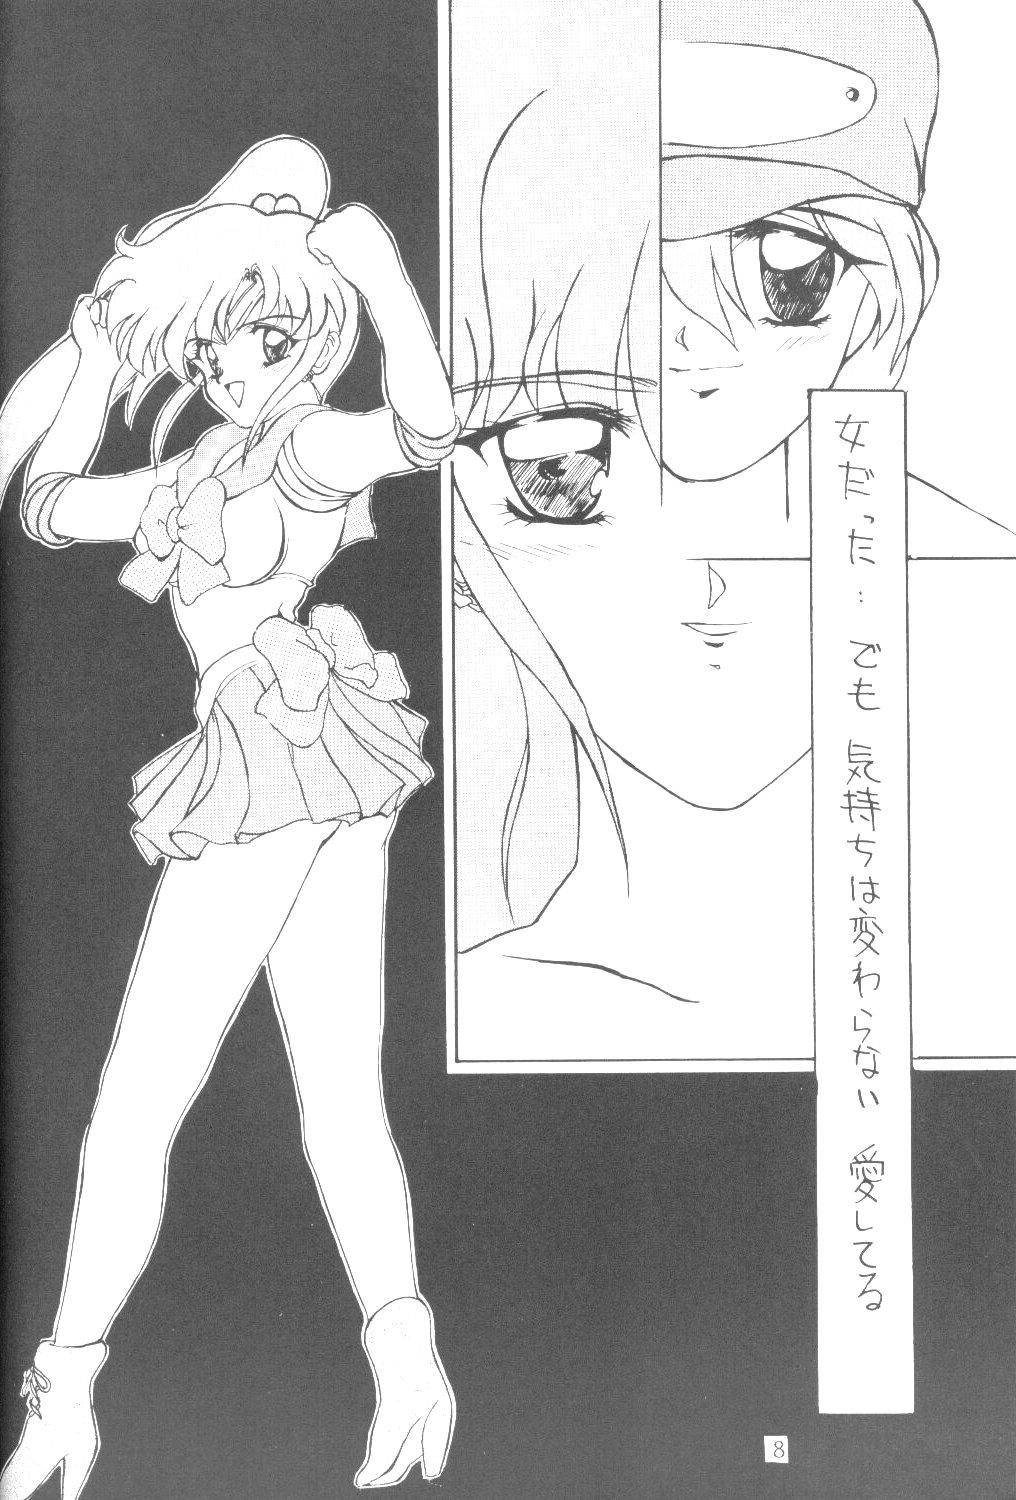 Twinks ALIVE AMI LOST - Sailor moon Lezbi - Page 7